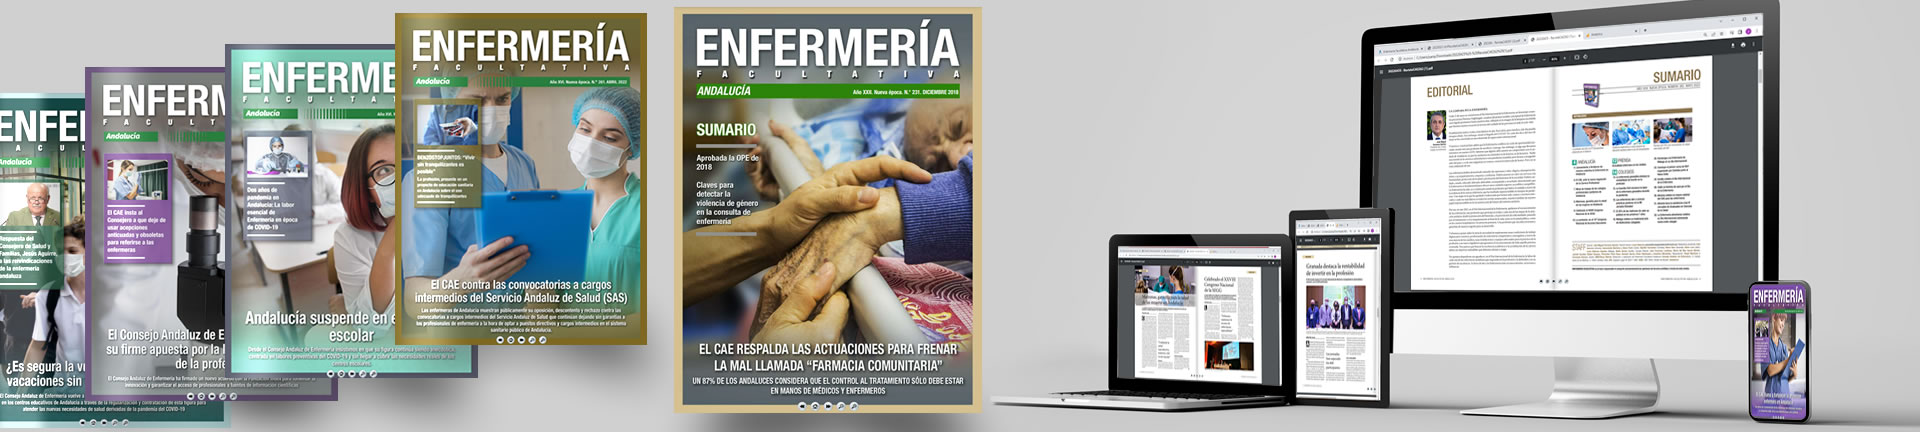 Consejo Andaluz de Colegios de Enfermería - CAE - Revista Enfermería Facultativa número 231 - Edición Andalucía